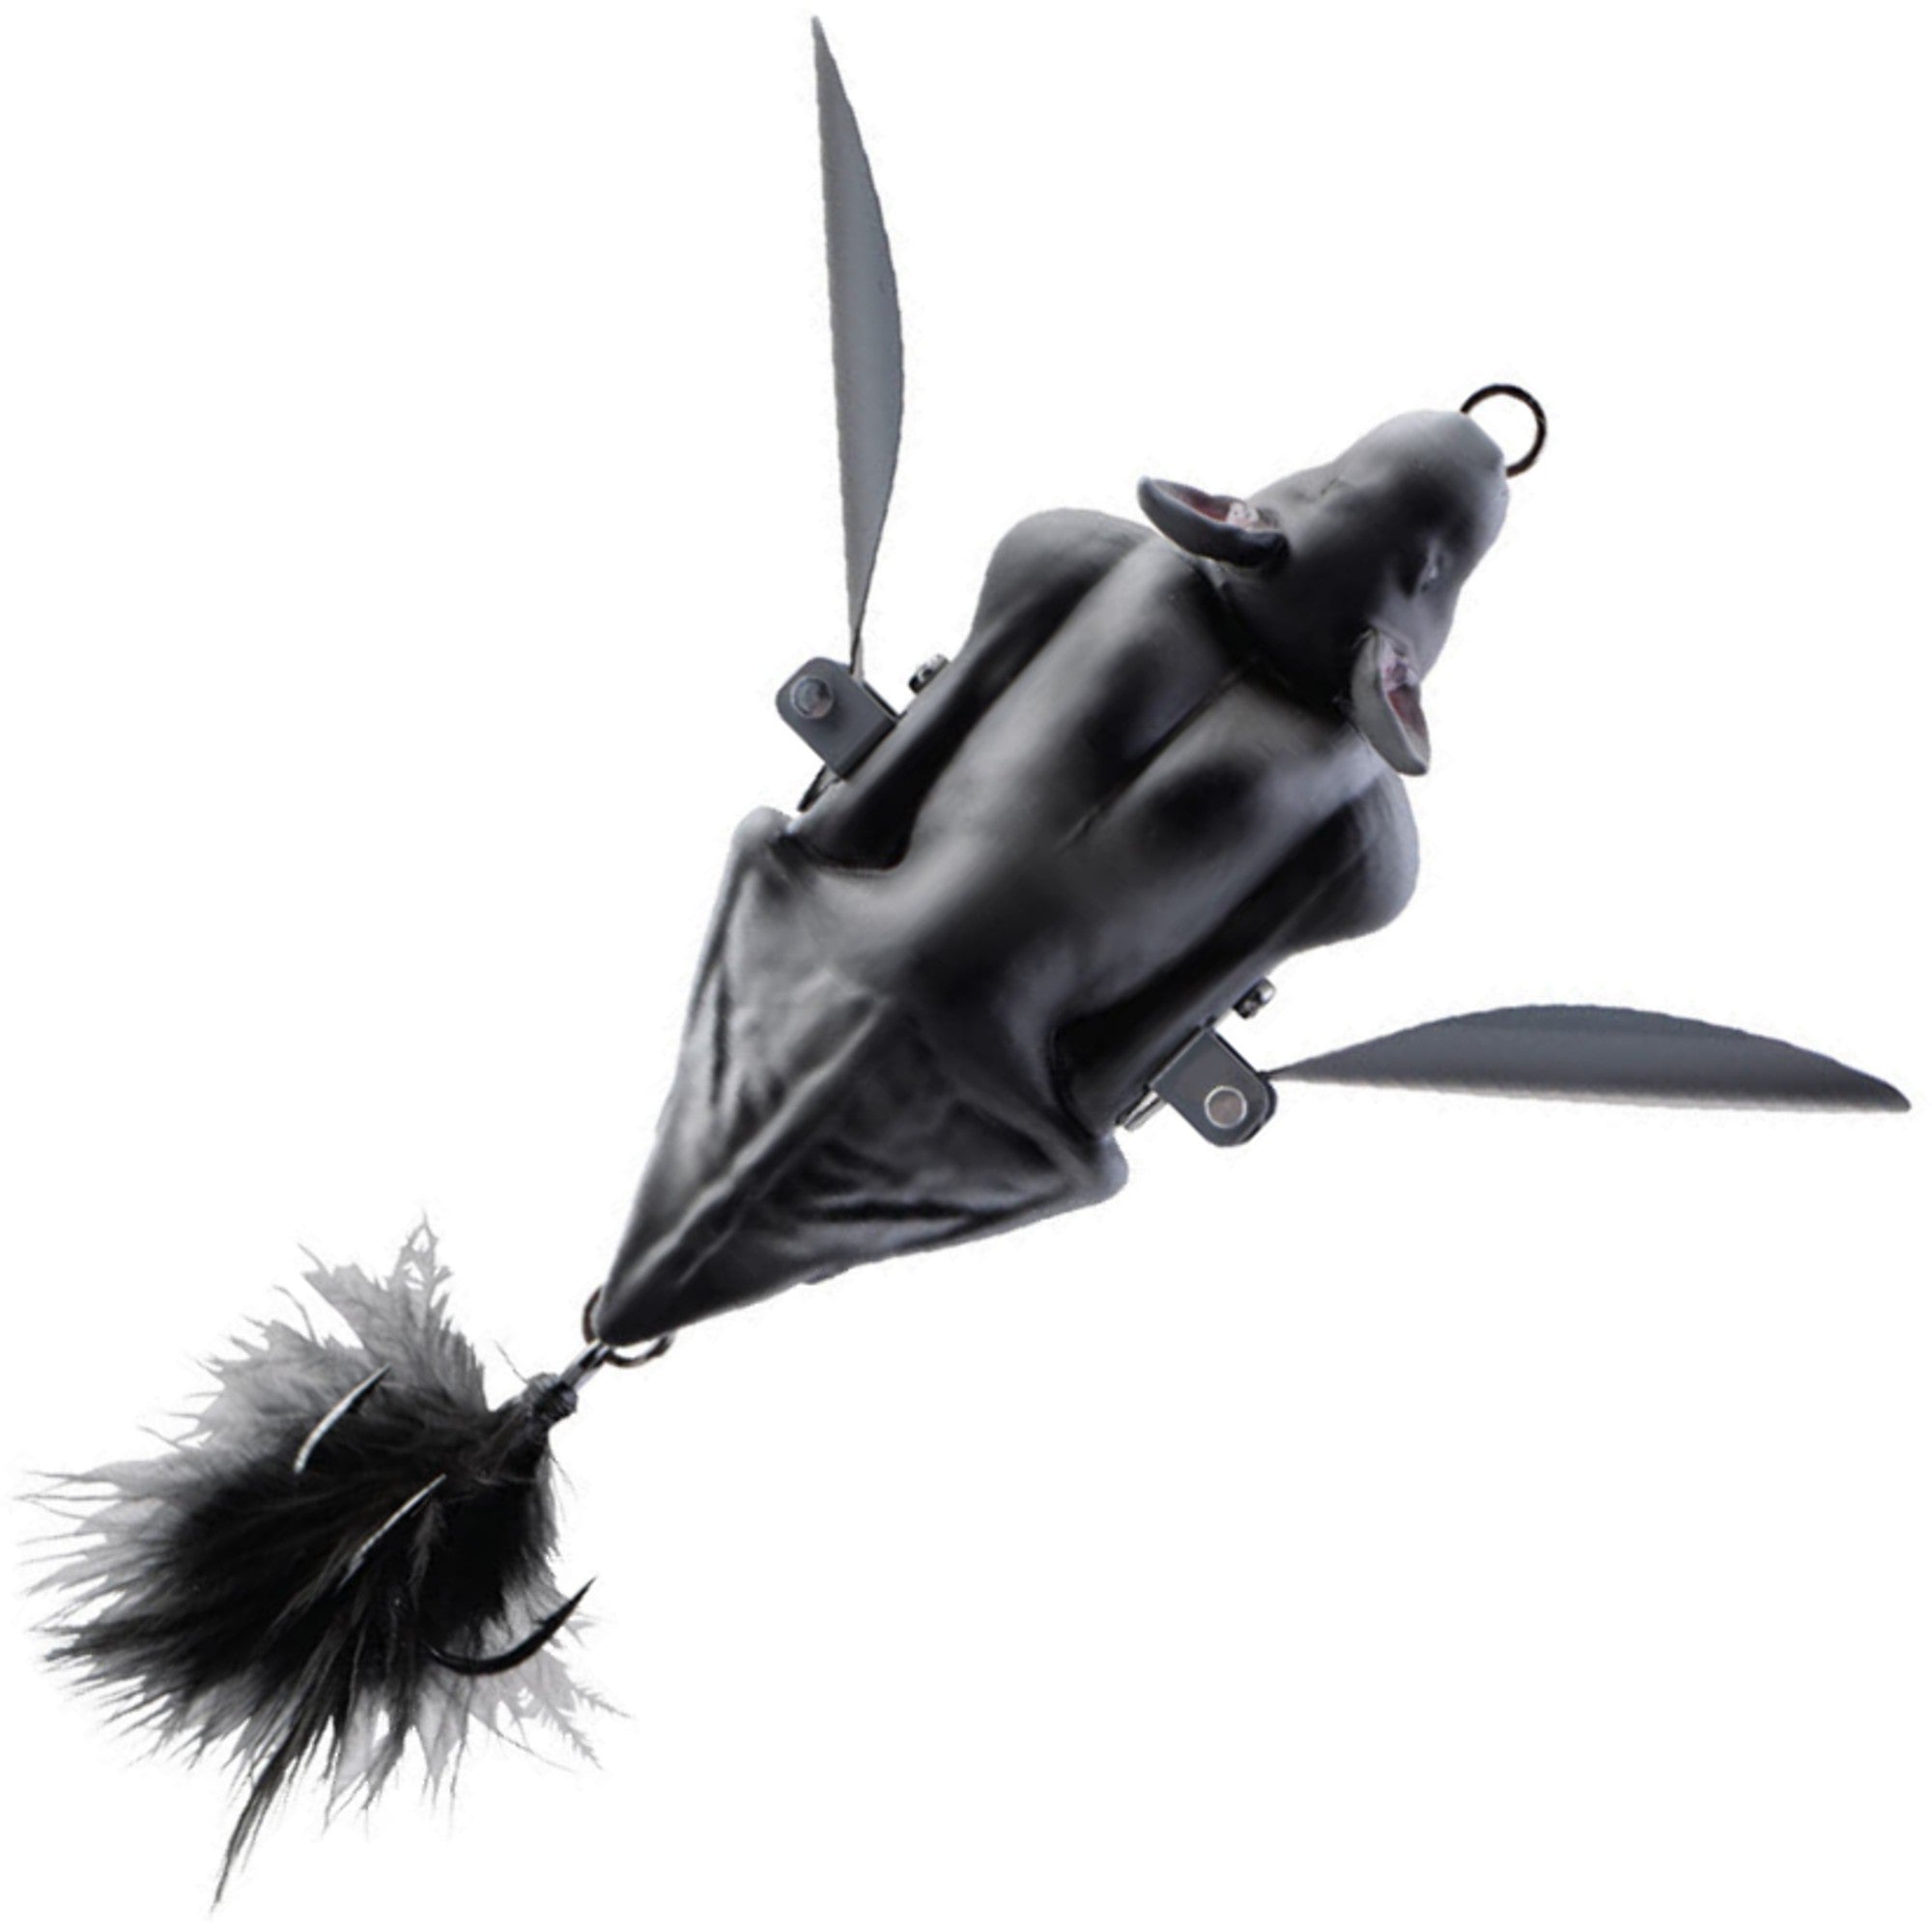 Savage Gear 3D Bat Topwater Lures - Predator Lures – Anglers World